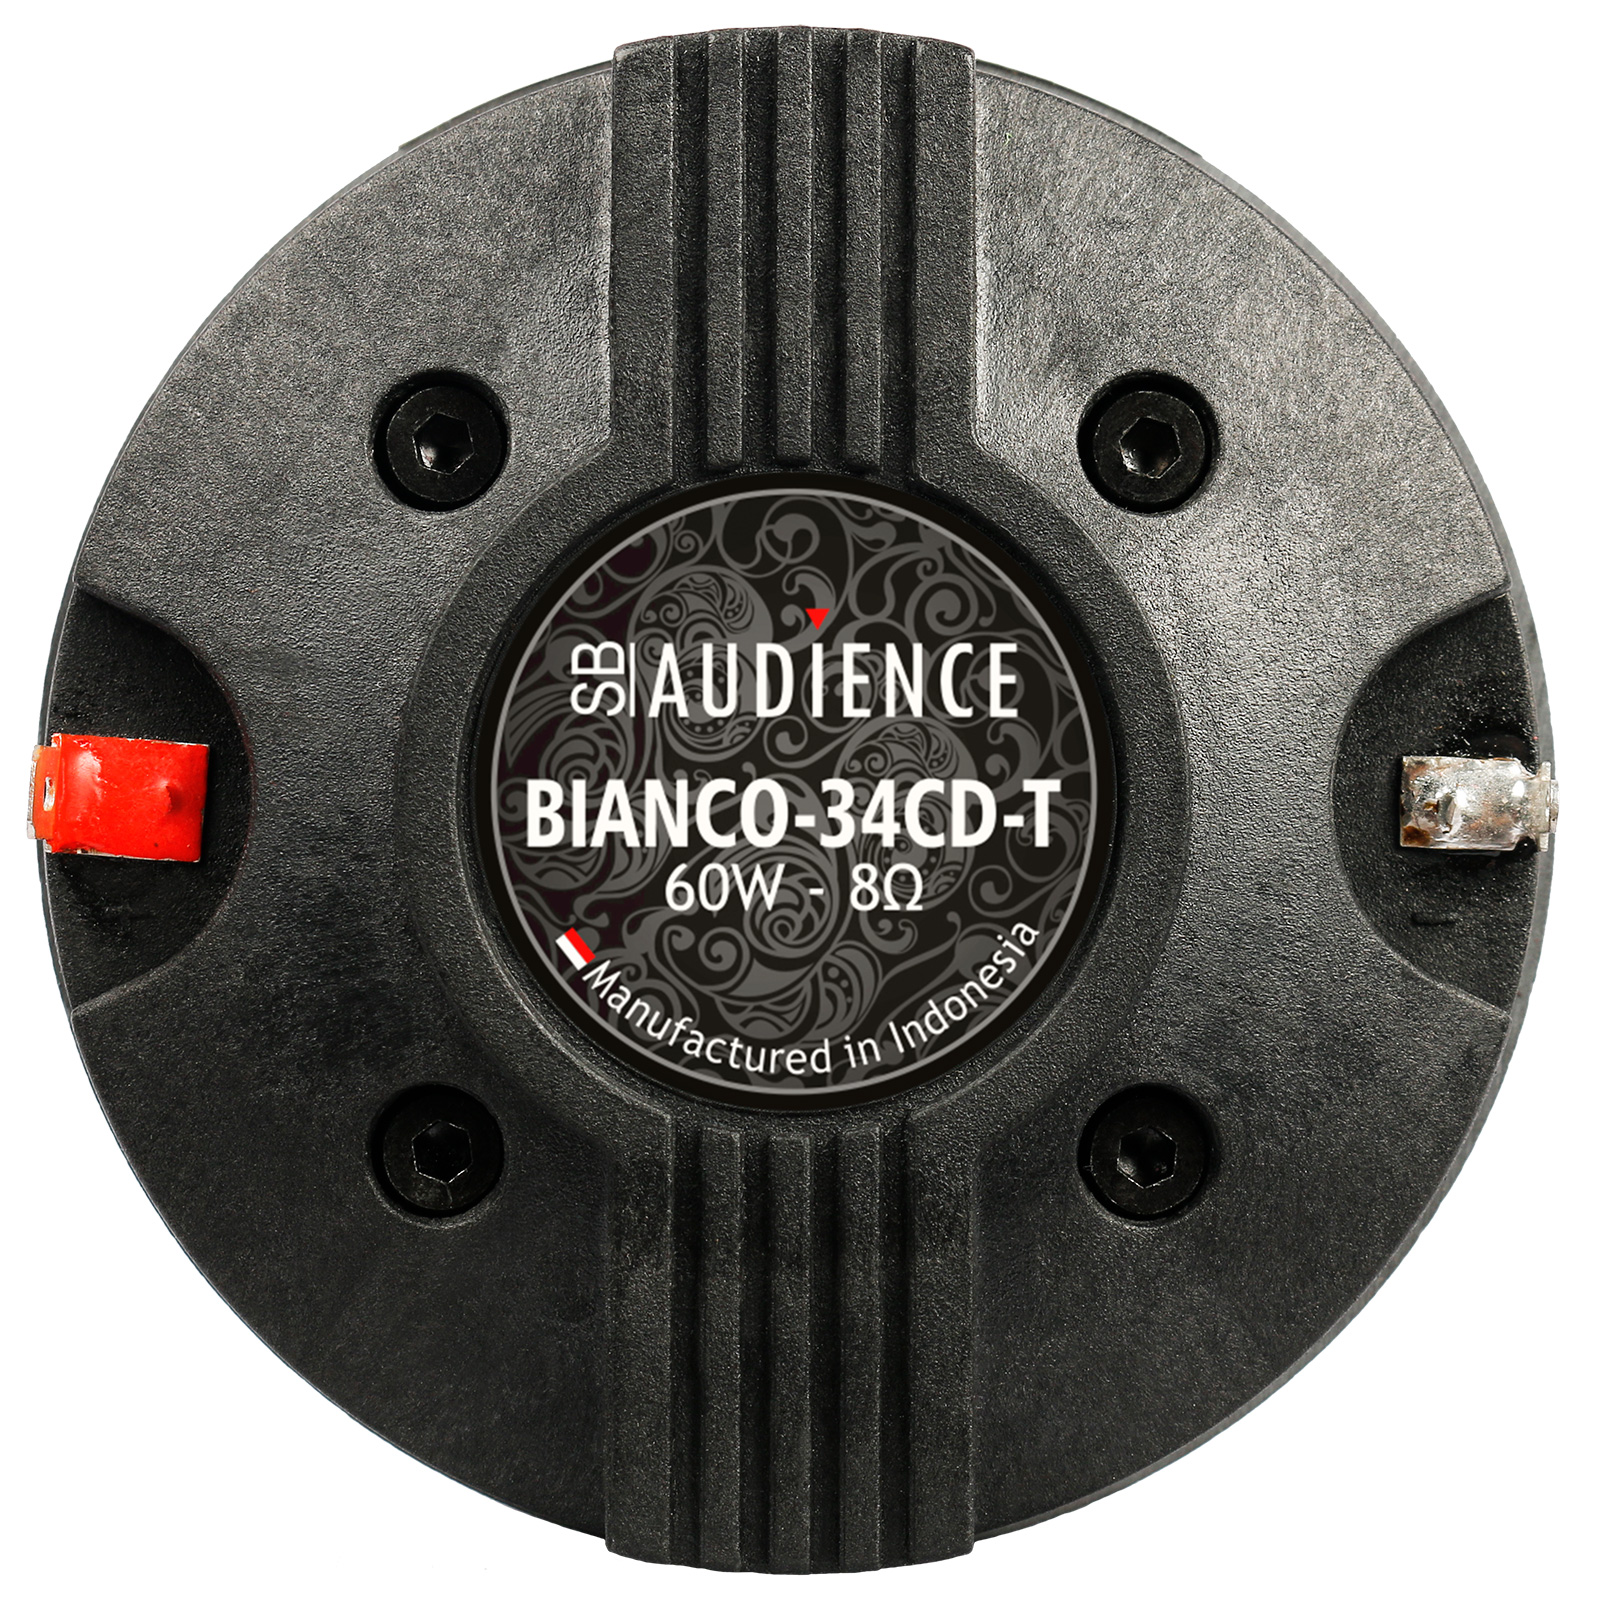 SB Audience BIANCO-34CD-T画像